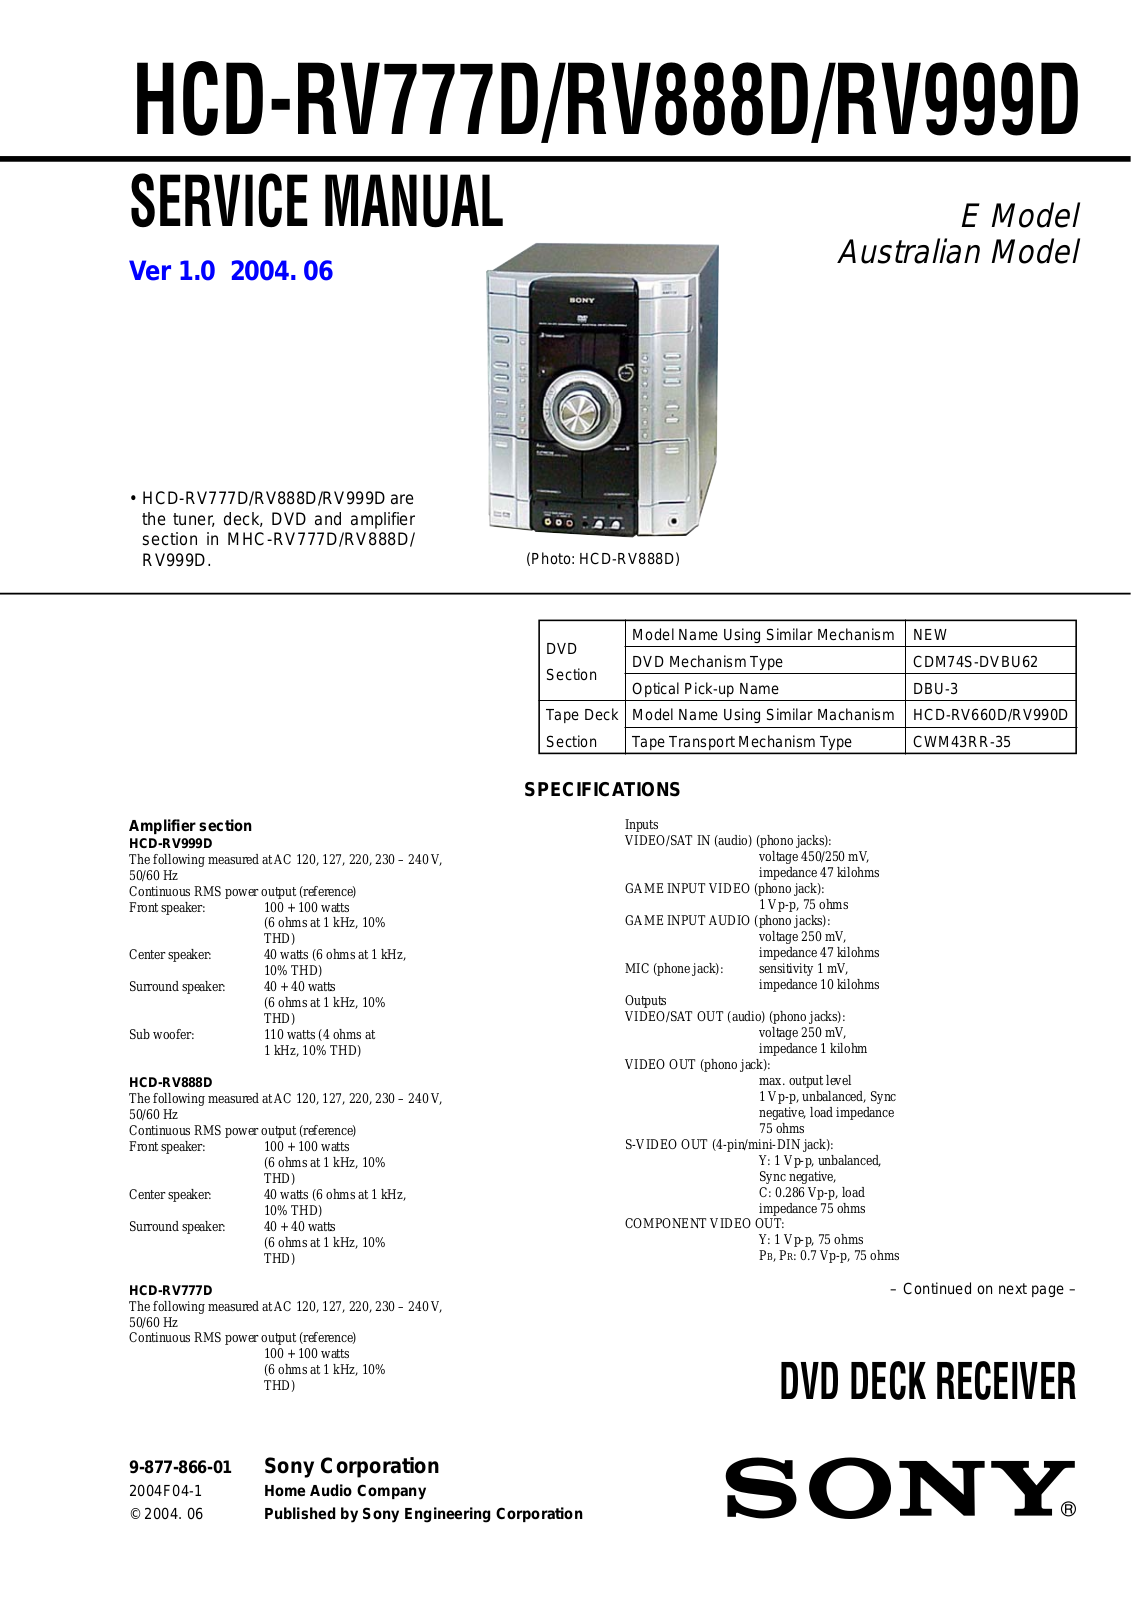 Sony HCD-RV777D, HCD-RV888D, HCD-RV999D Service Manual